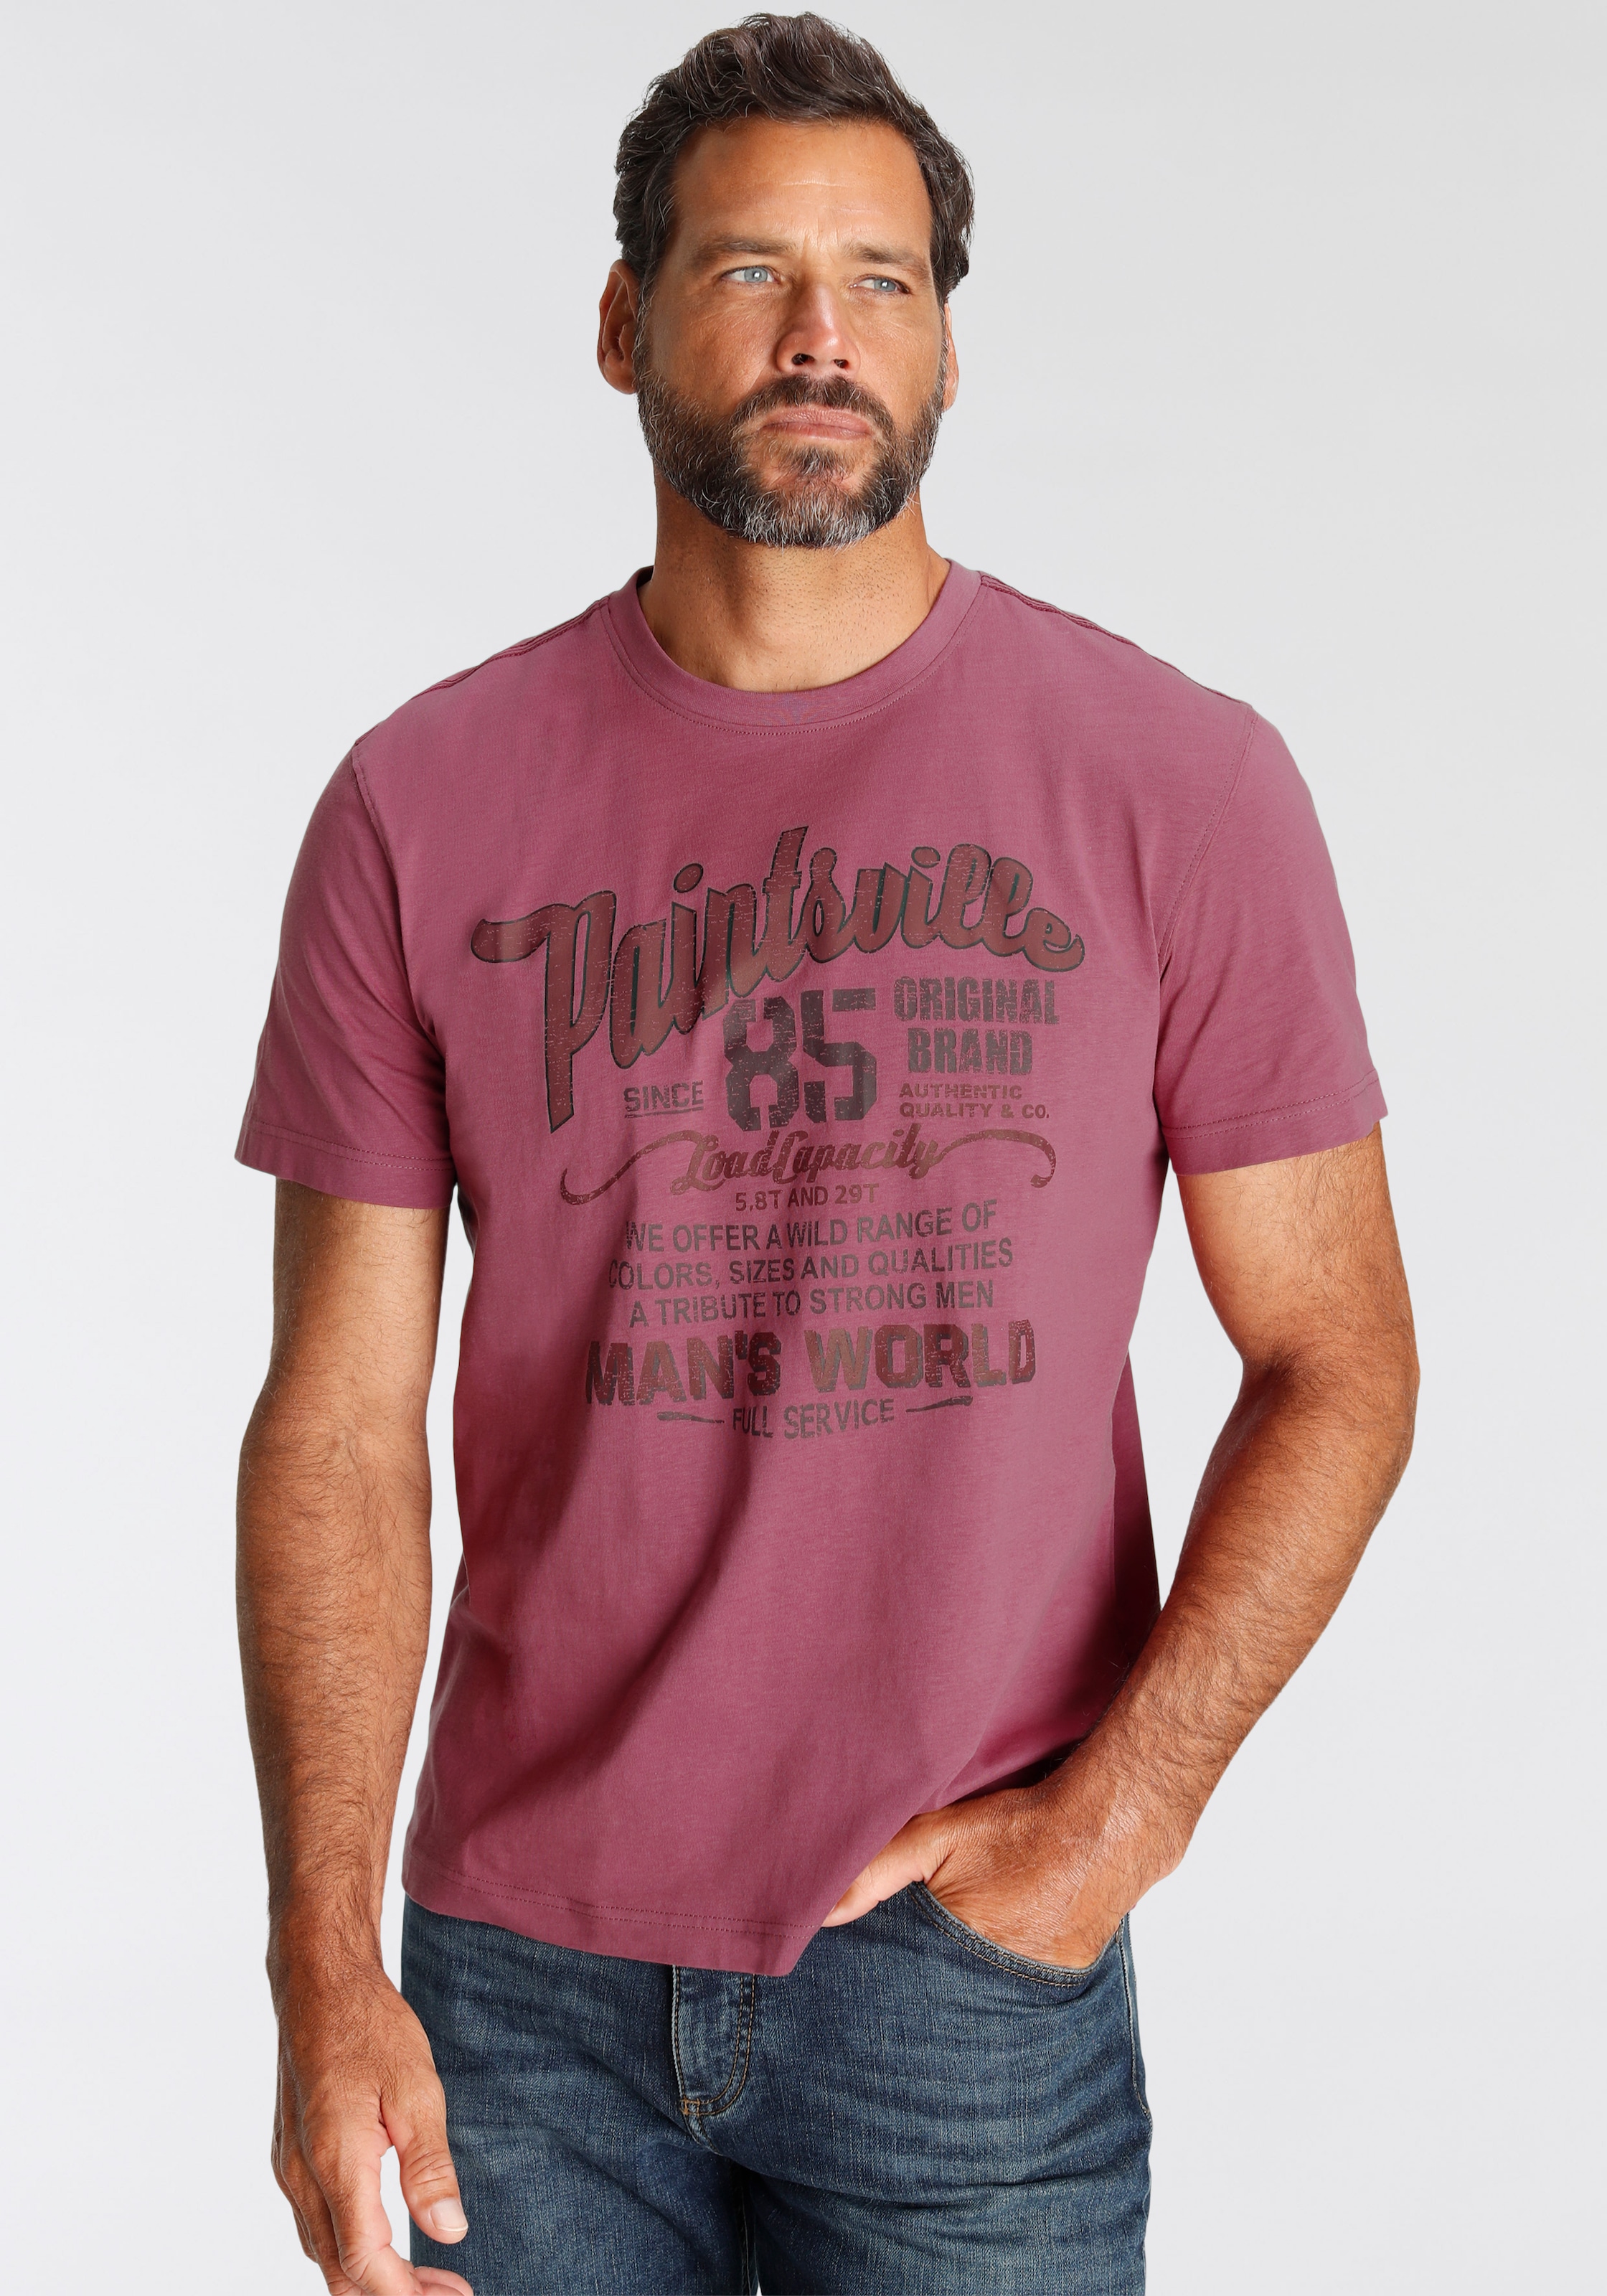 Man's World T-Shirt, mit Print